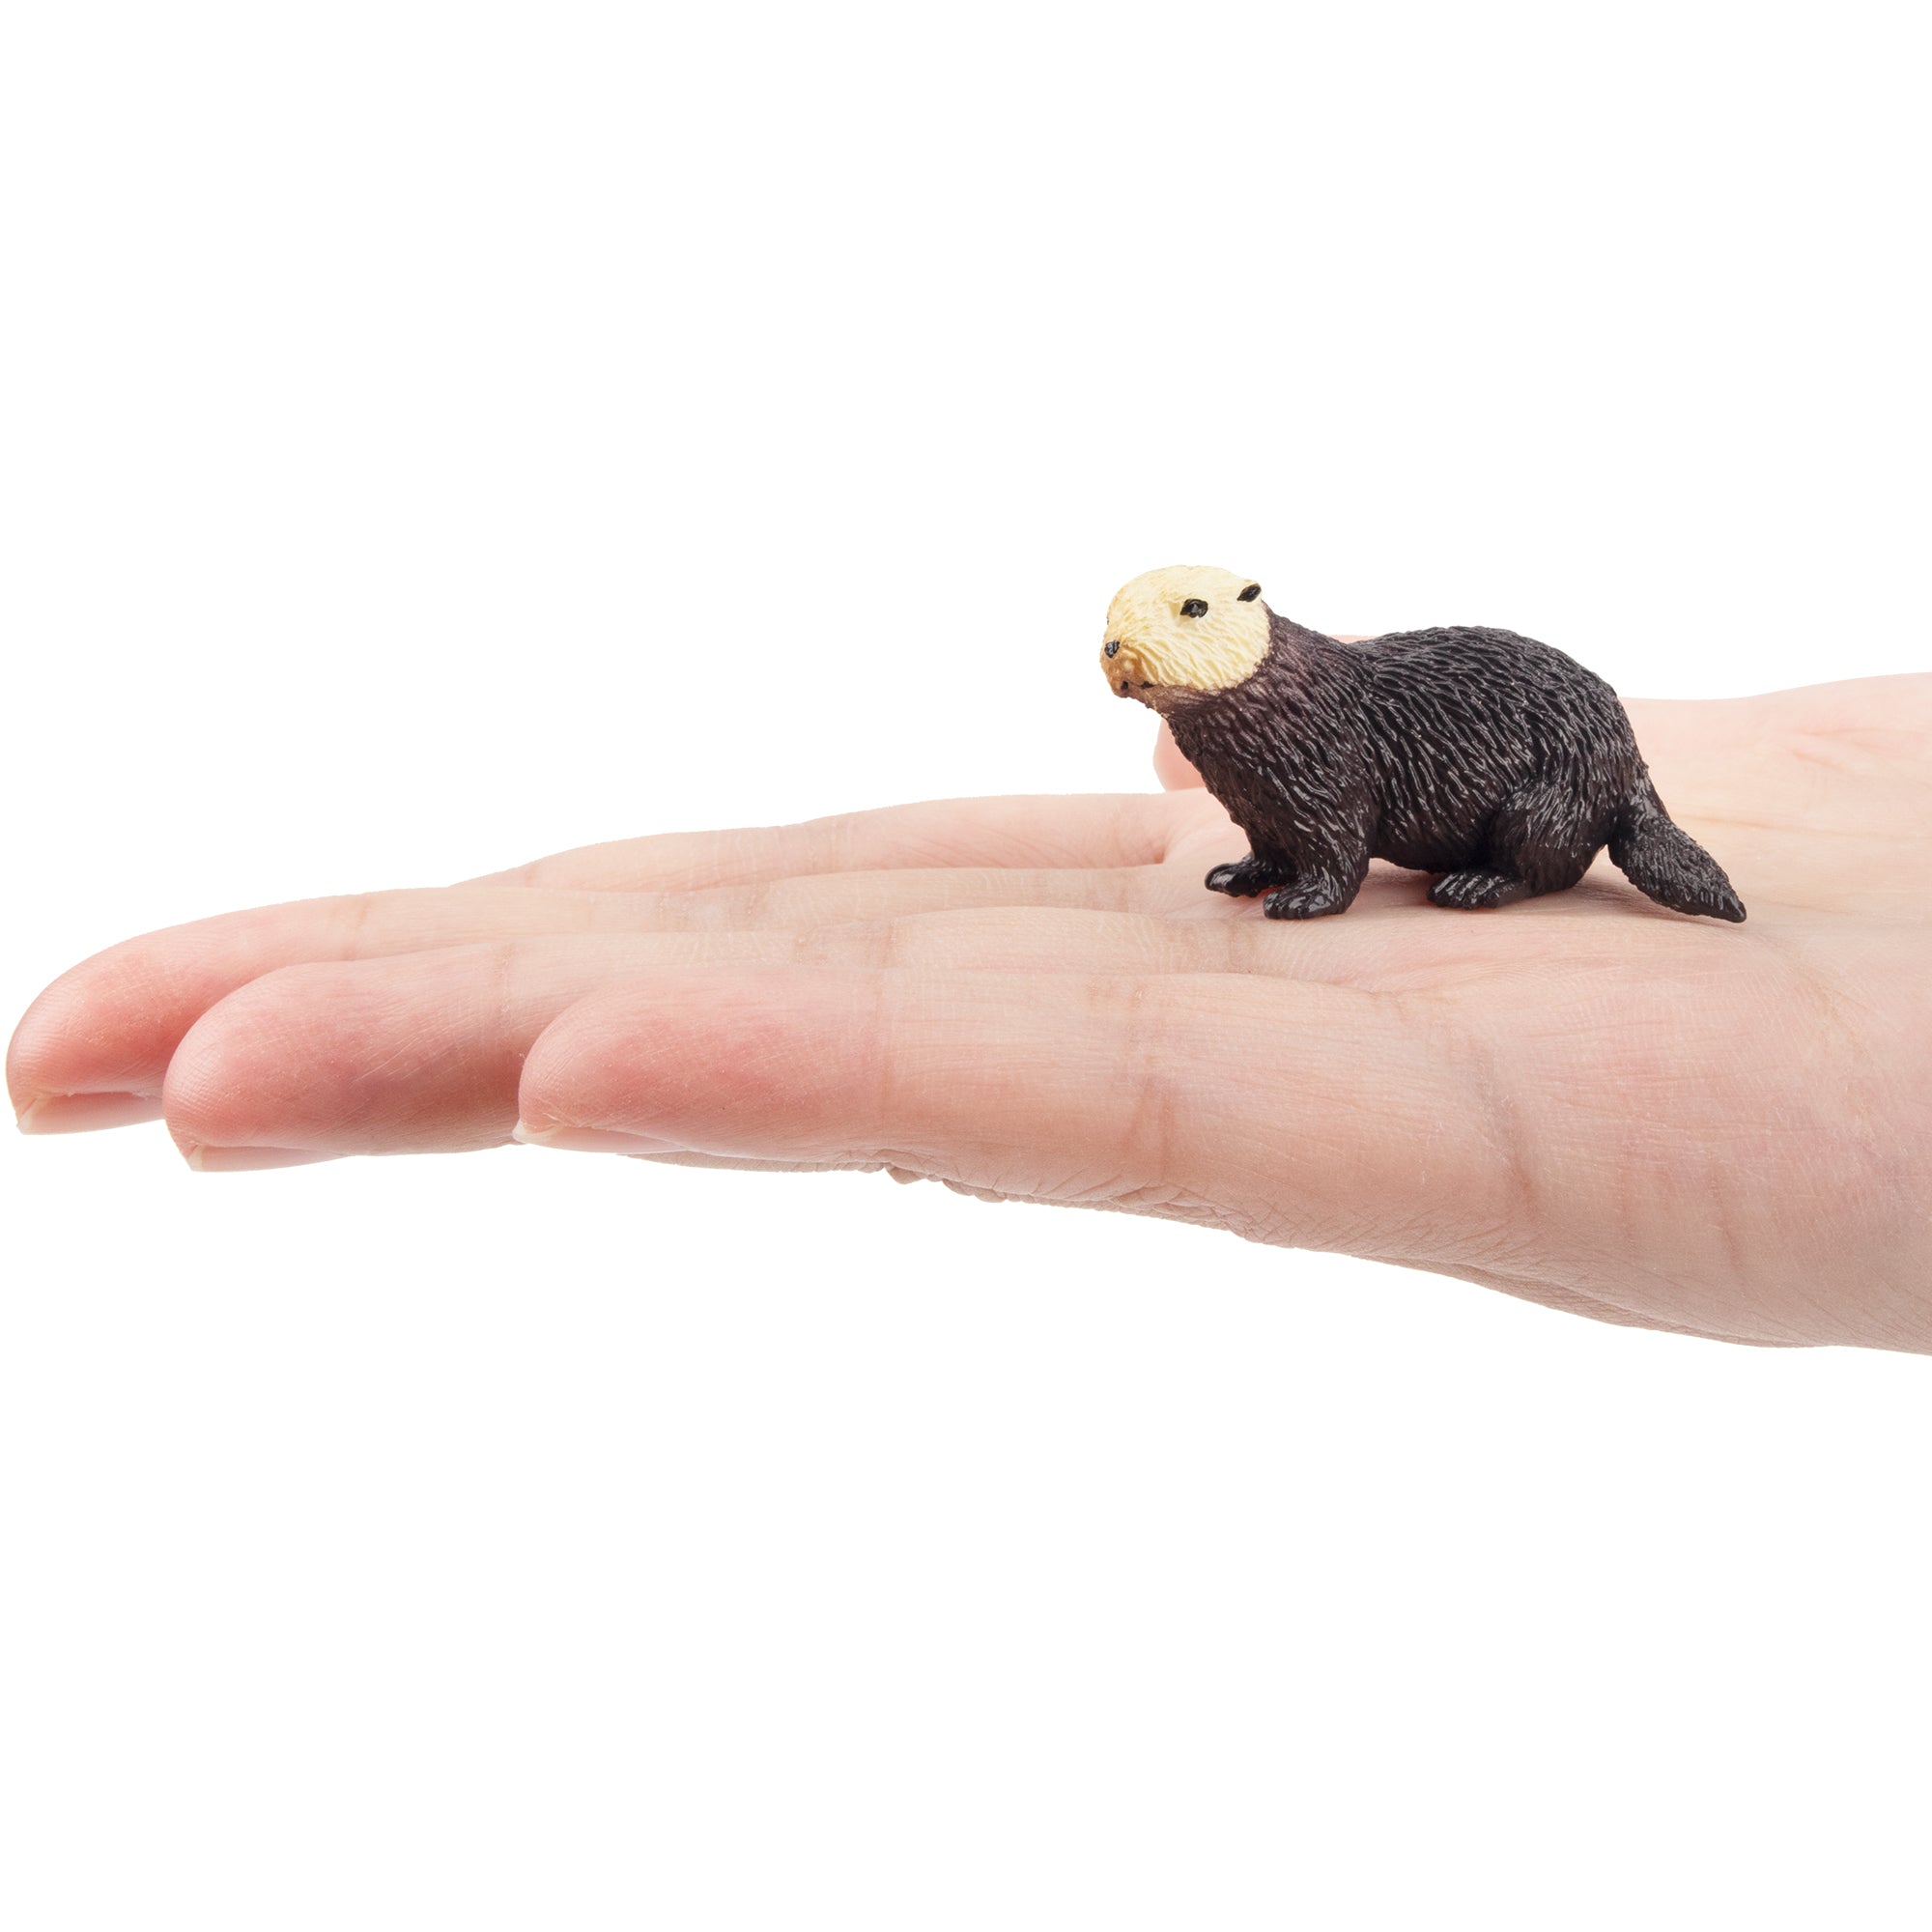 Toymany Sea Otter Figurine Toy-on hand